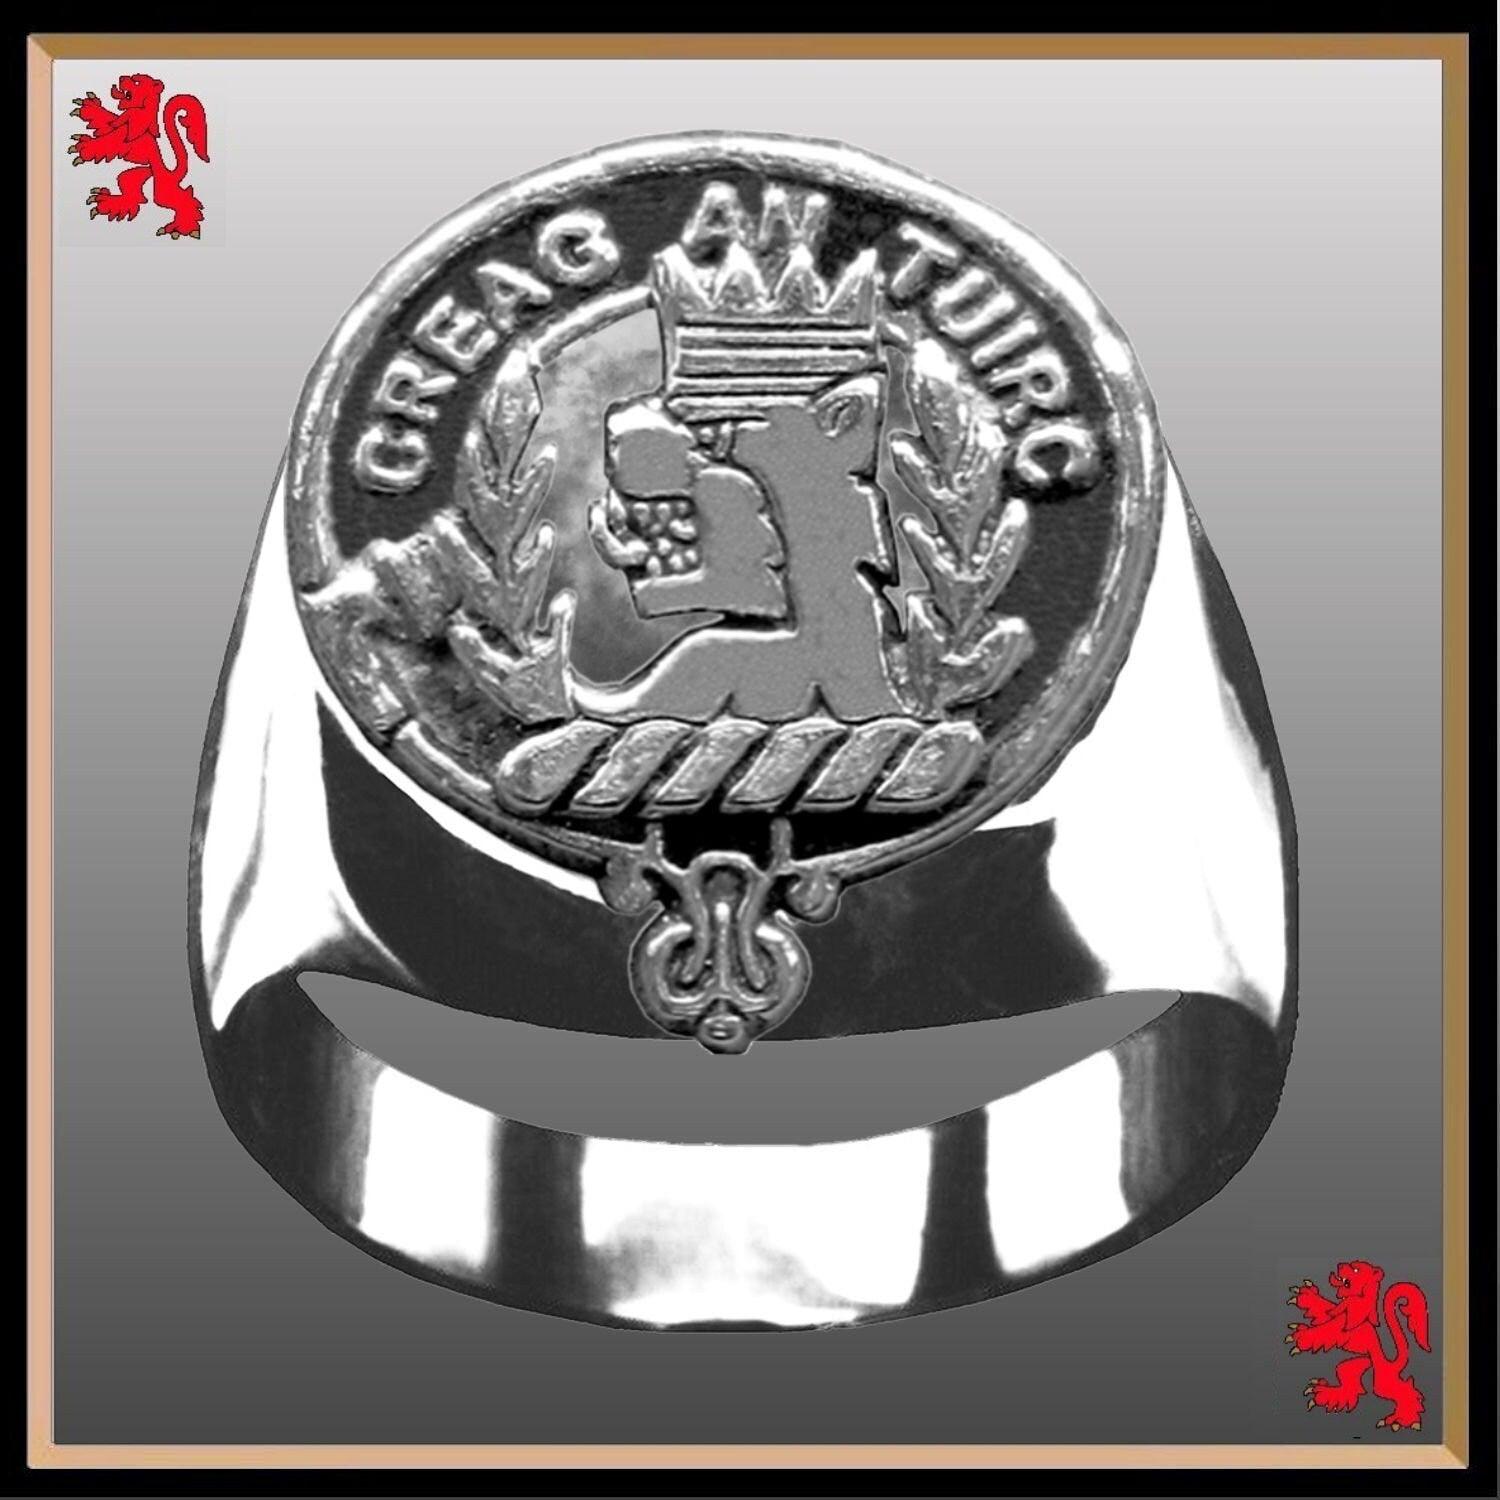 MacLaren Scottish Clan Crest Ring GC100  ~  Sterling Silver and Karat Gold